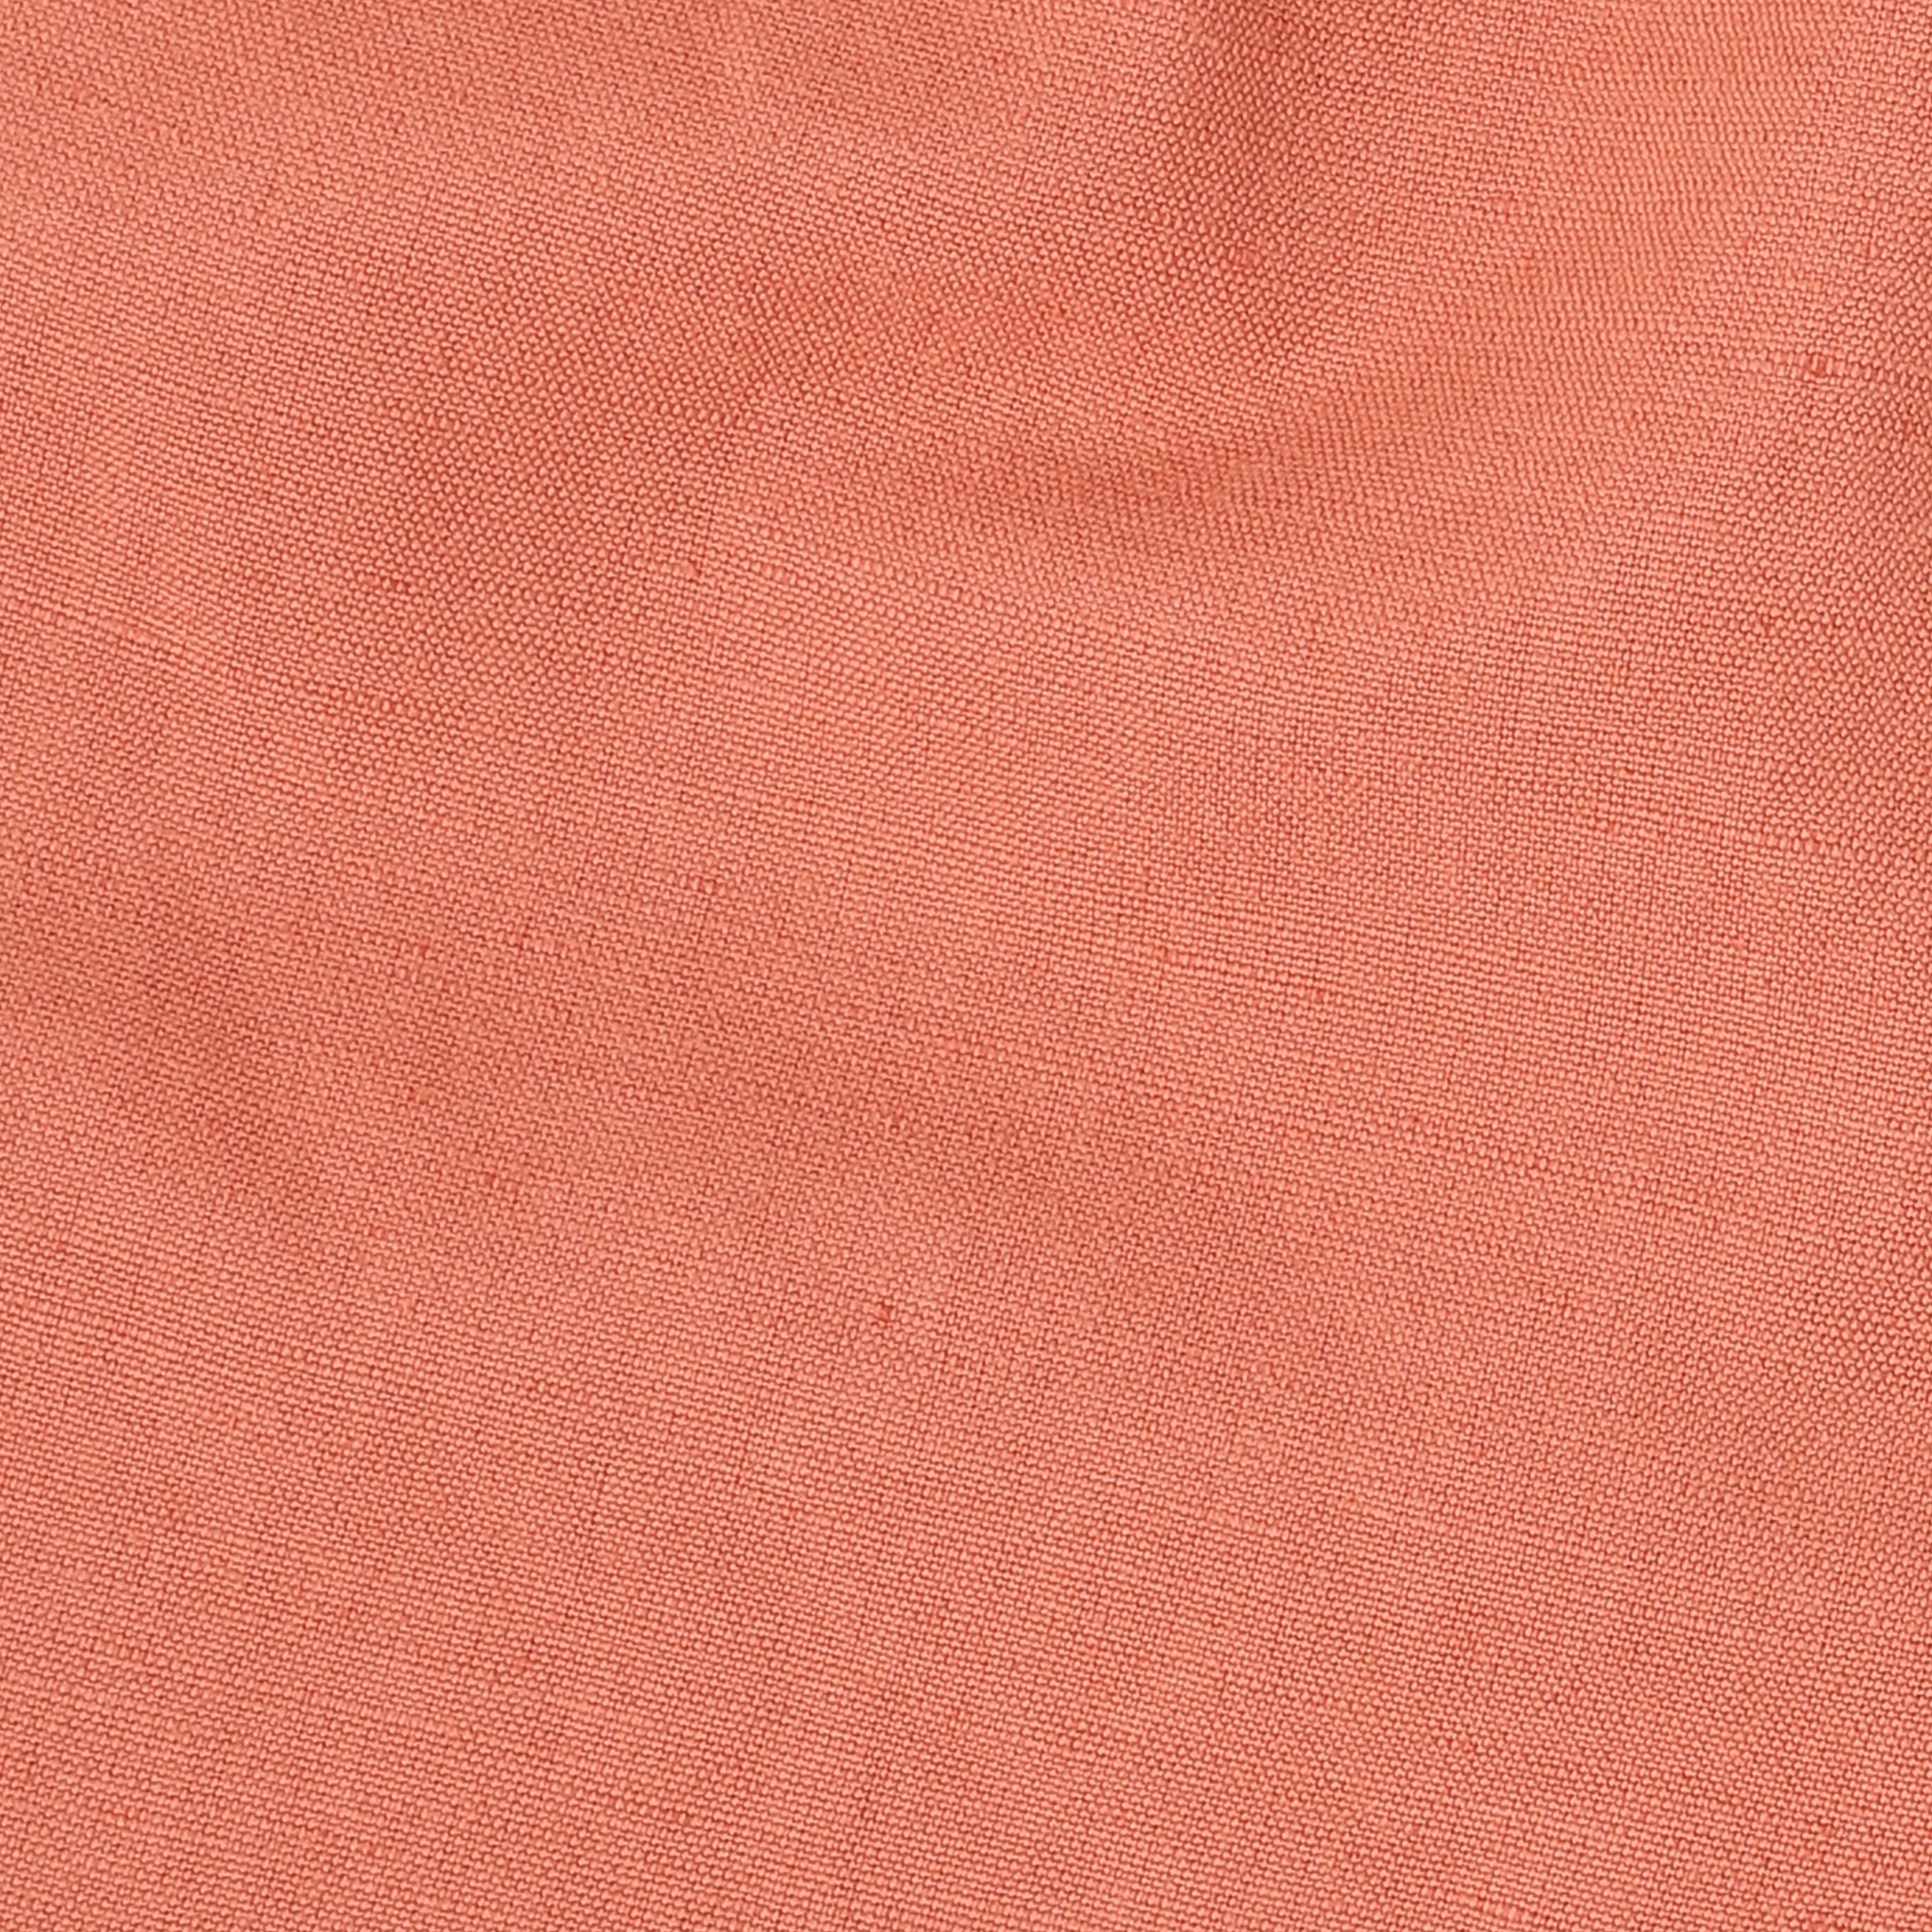 Retreat Linen Short Clay close up of fabric